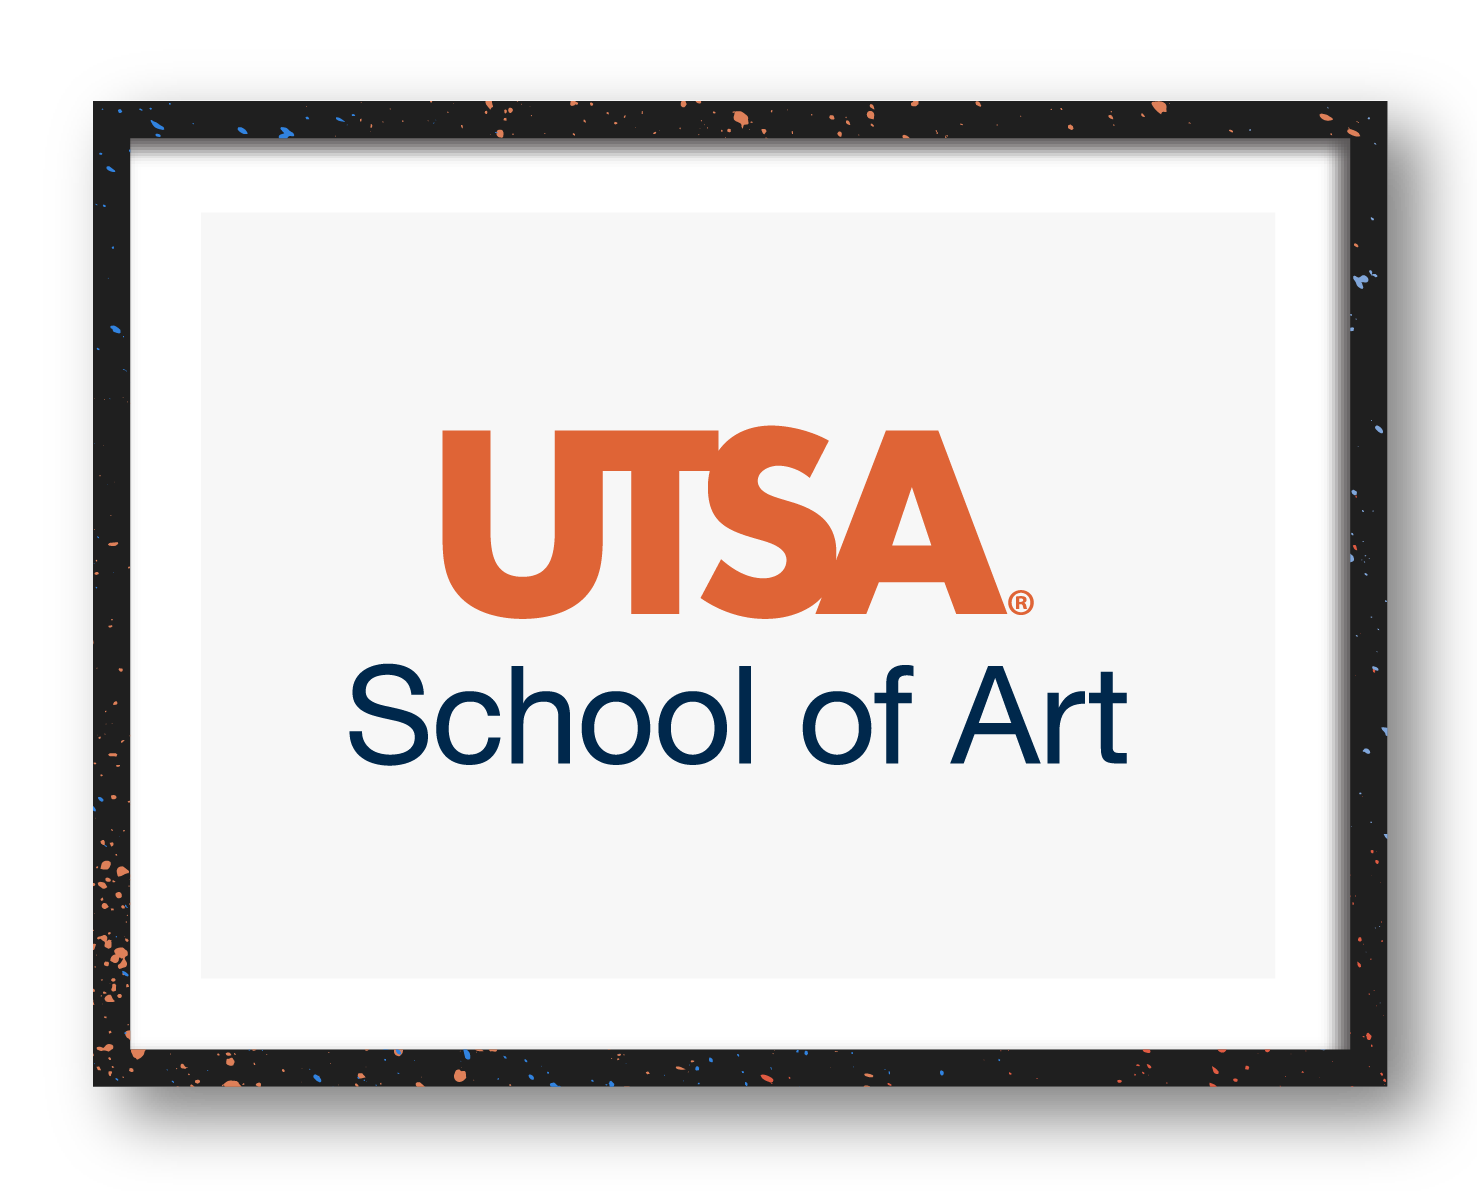 UTSA School of Art